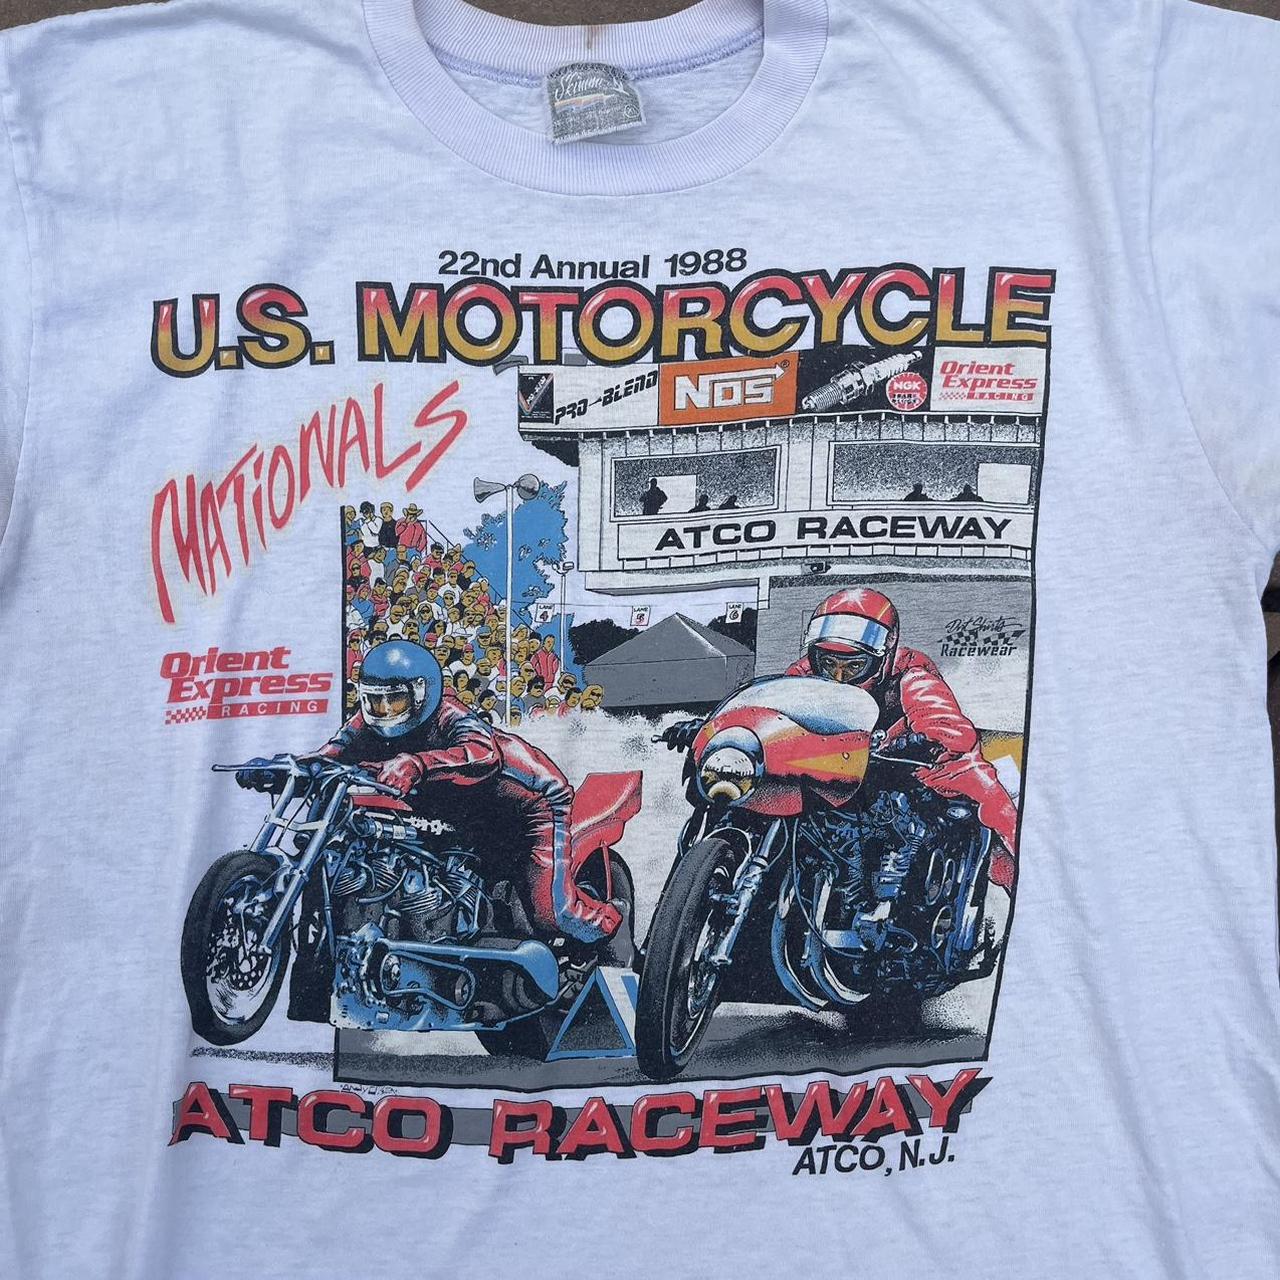 Vintage 1988 U.S Motorcycle T-Shirt Size XL, Super